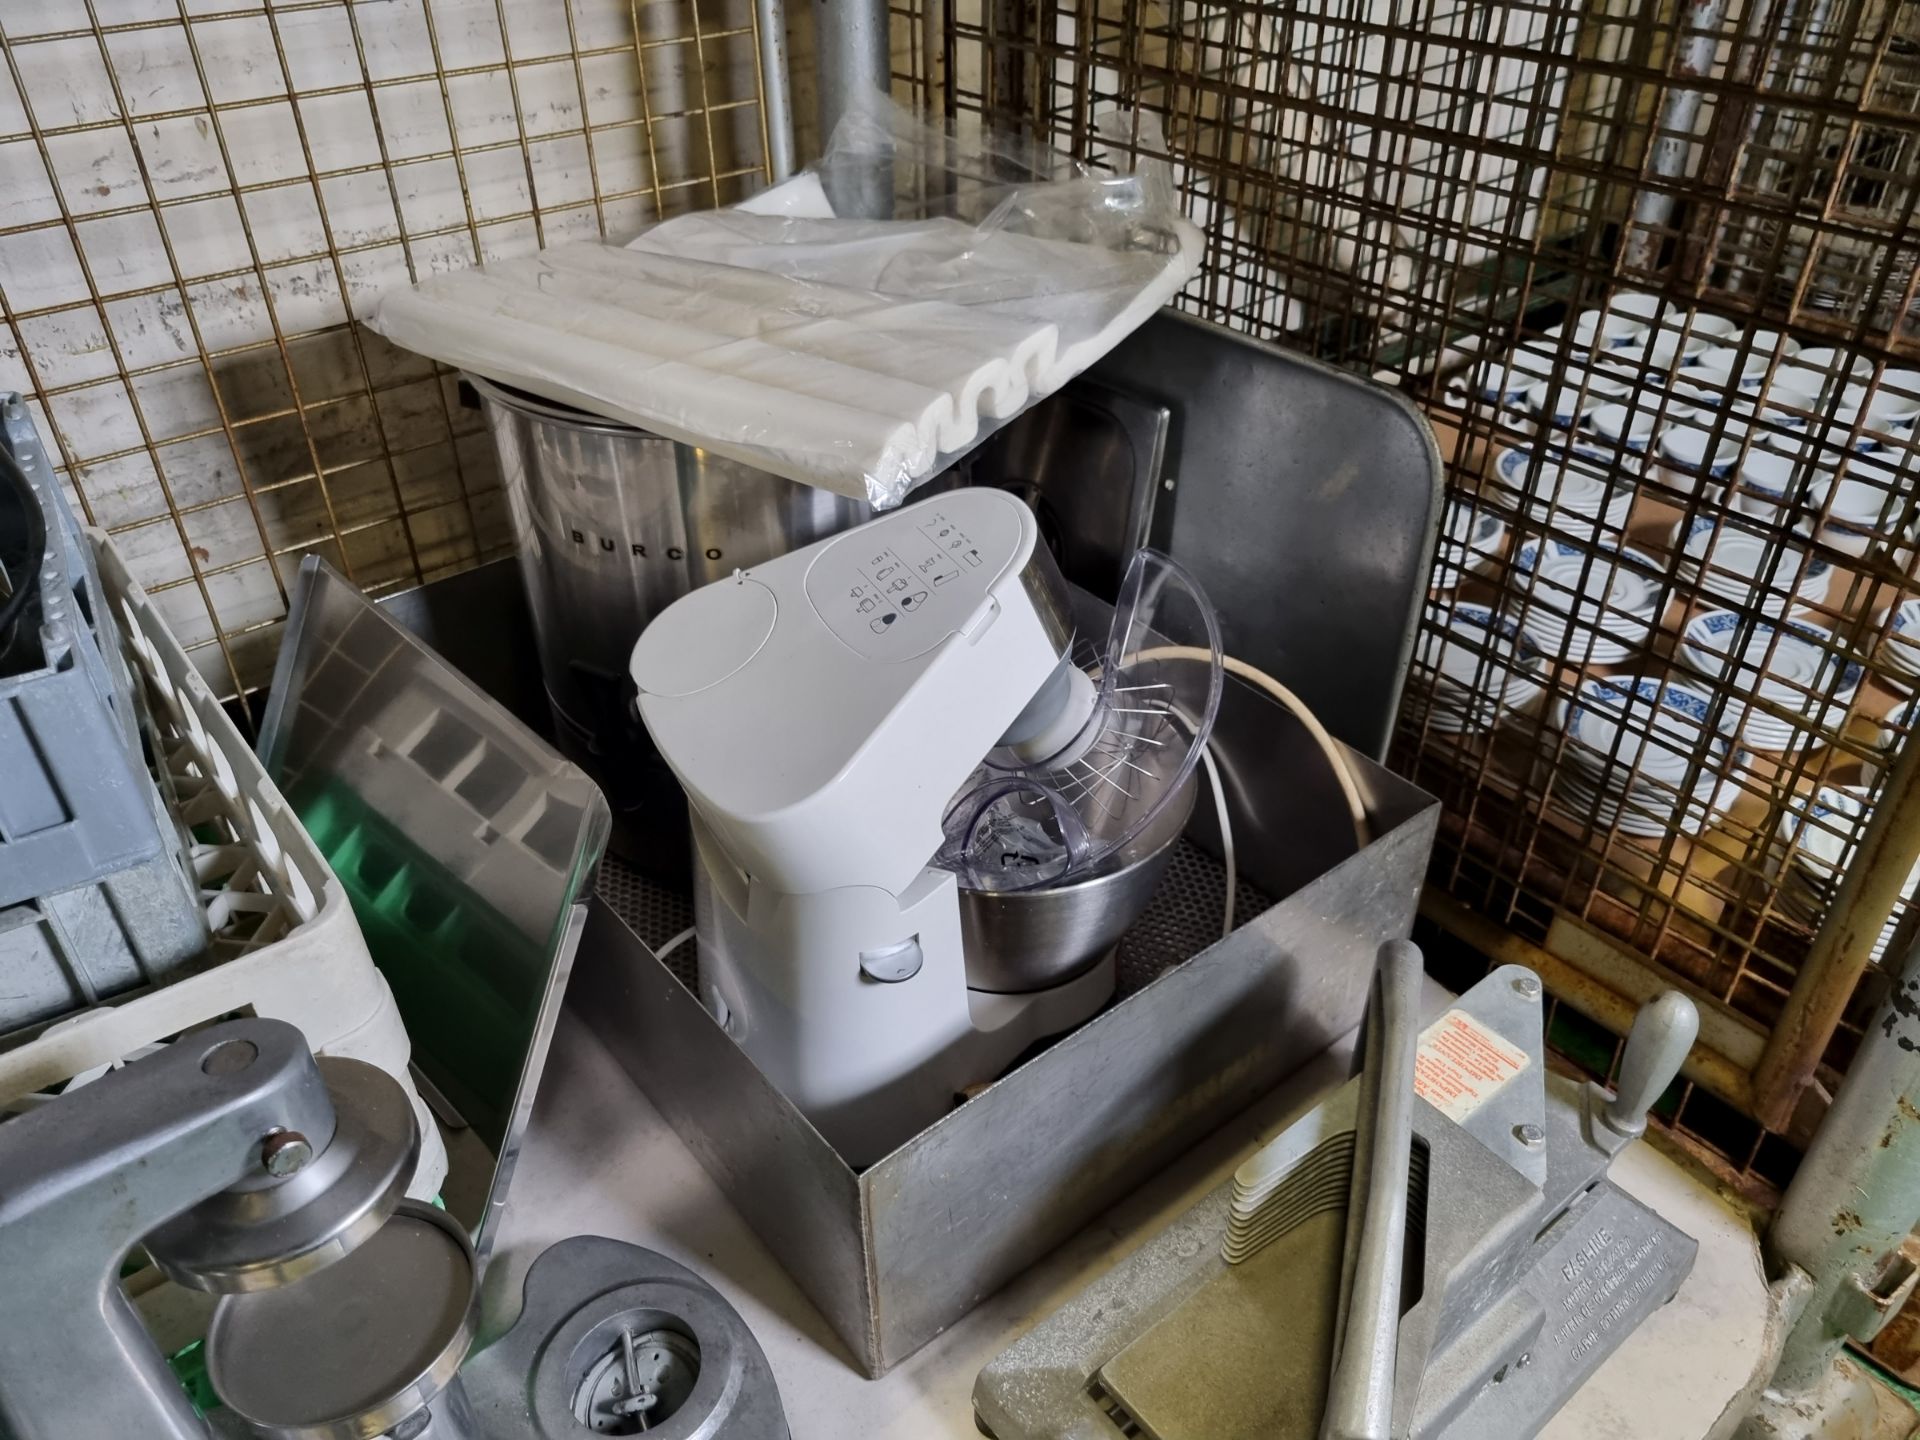 Catering equipment - dishwasher trays, food steamers, small mixer, tomato slicer, blender jug - Bild 5 aus 7